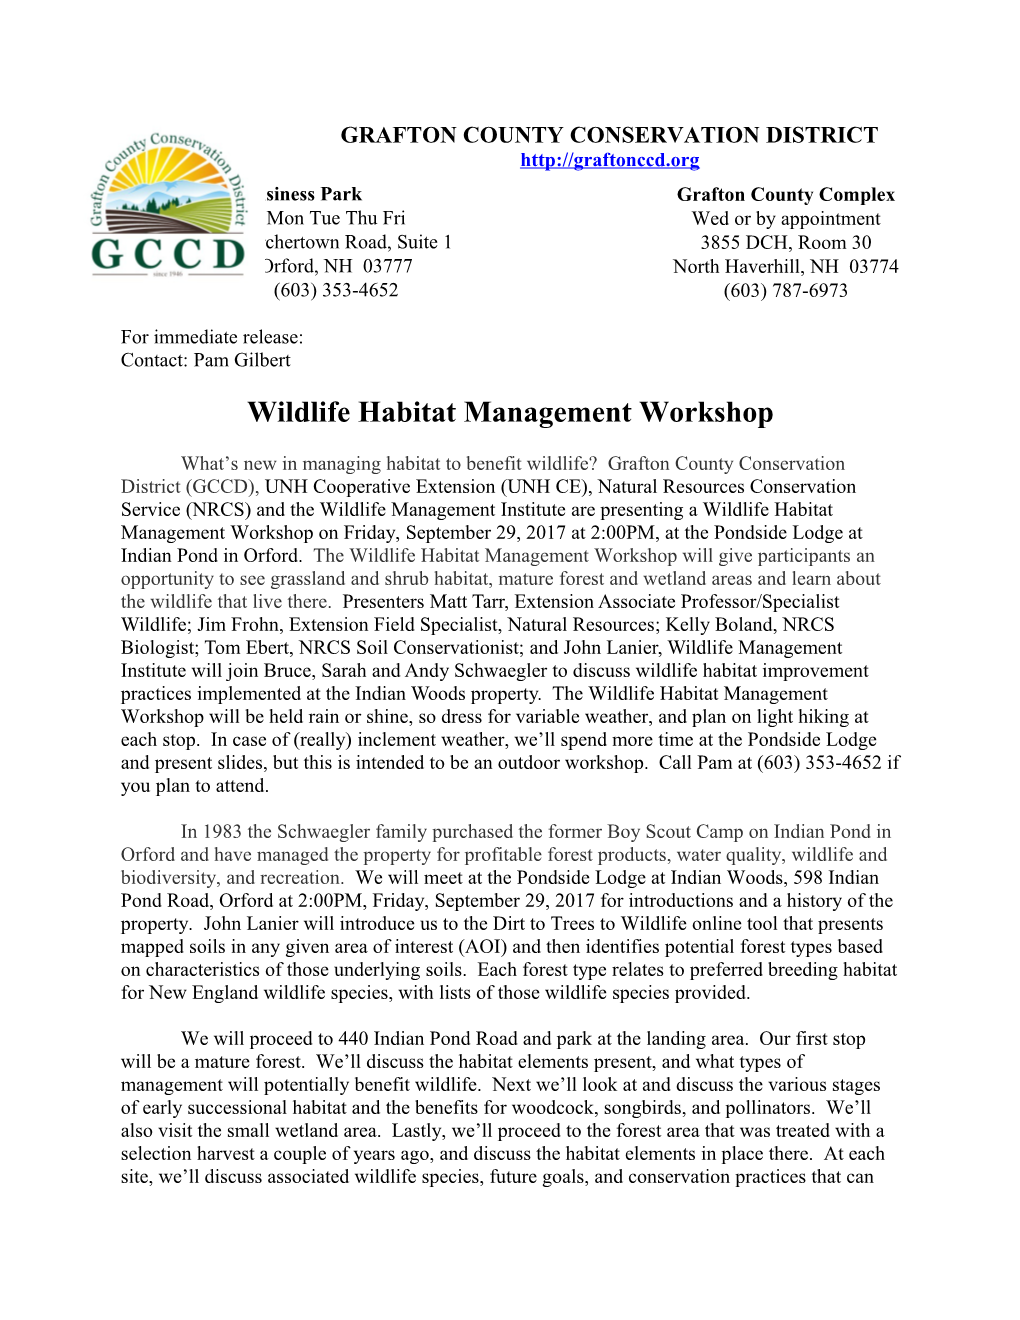 Wildlife Habitat Management Workshop